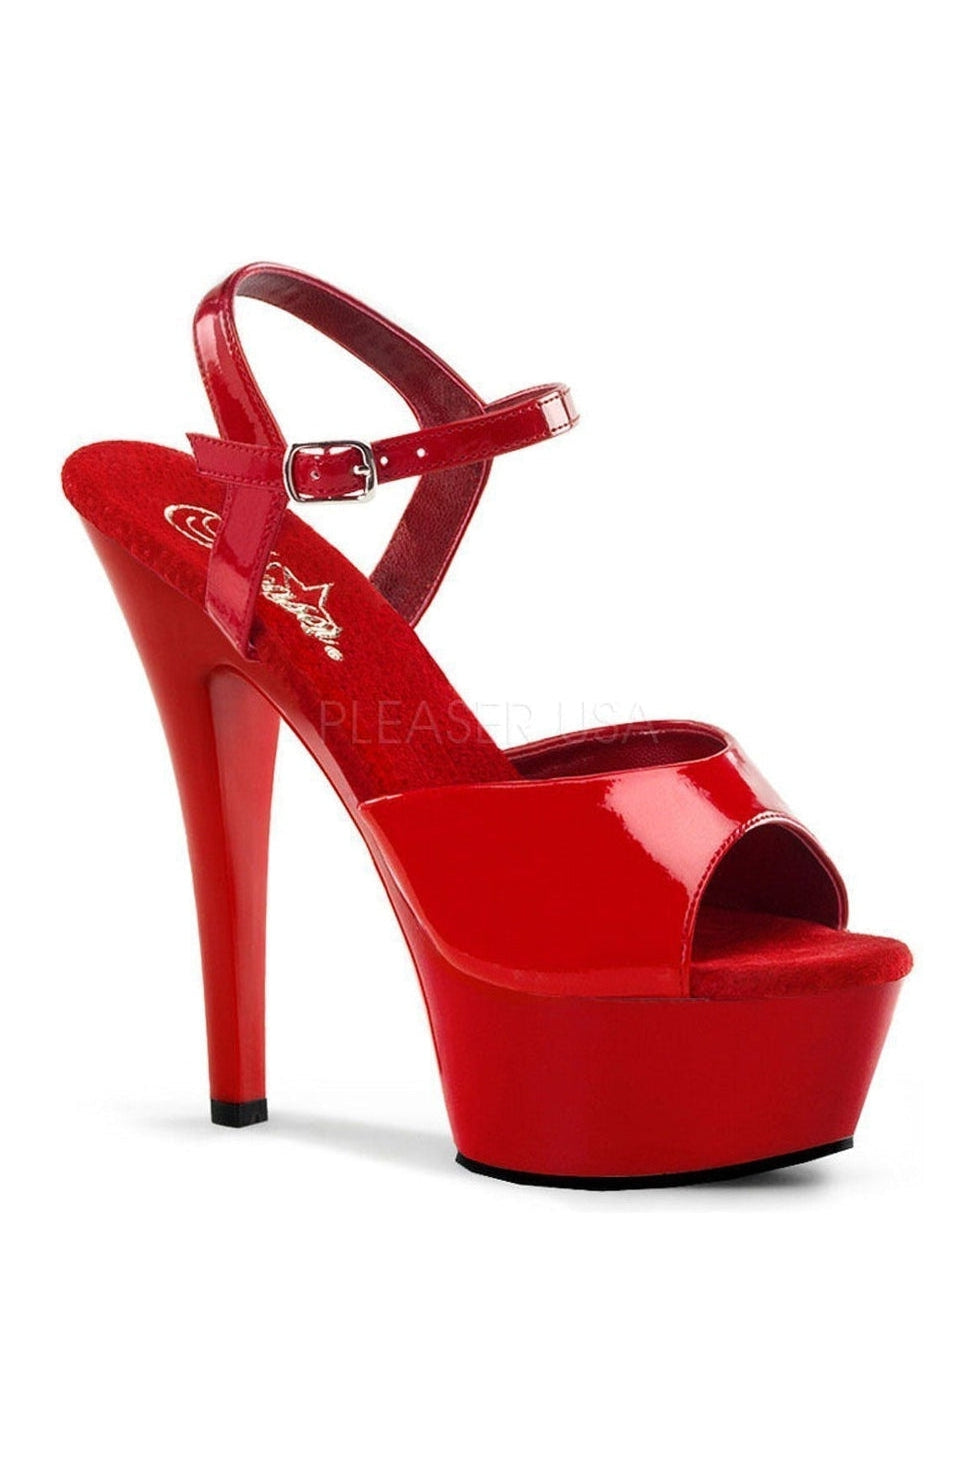 KISS-209 Platform Sandal | Red Patent-Pleaser-Red-Sandals-SEXYSHOES.COM